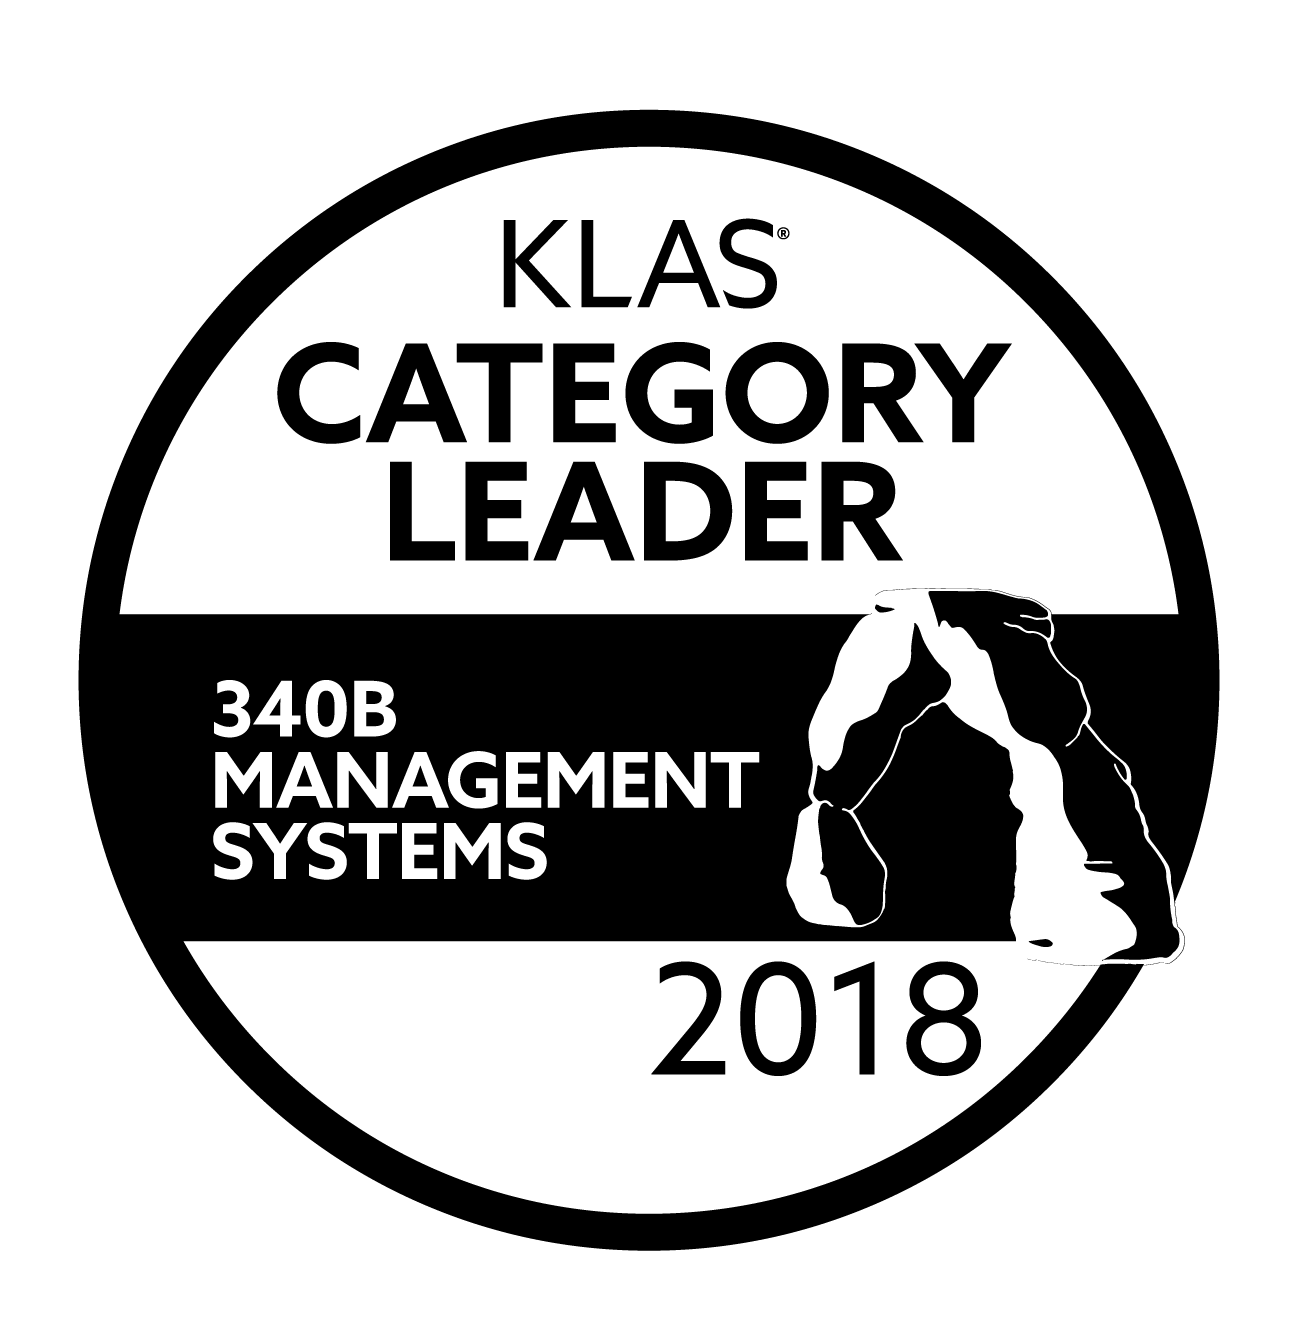 KLAS Category Leader 2018